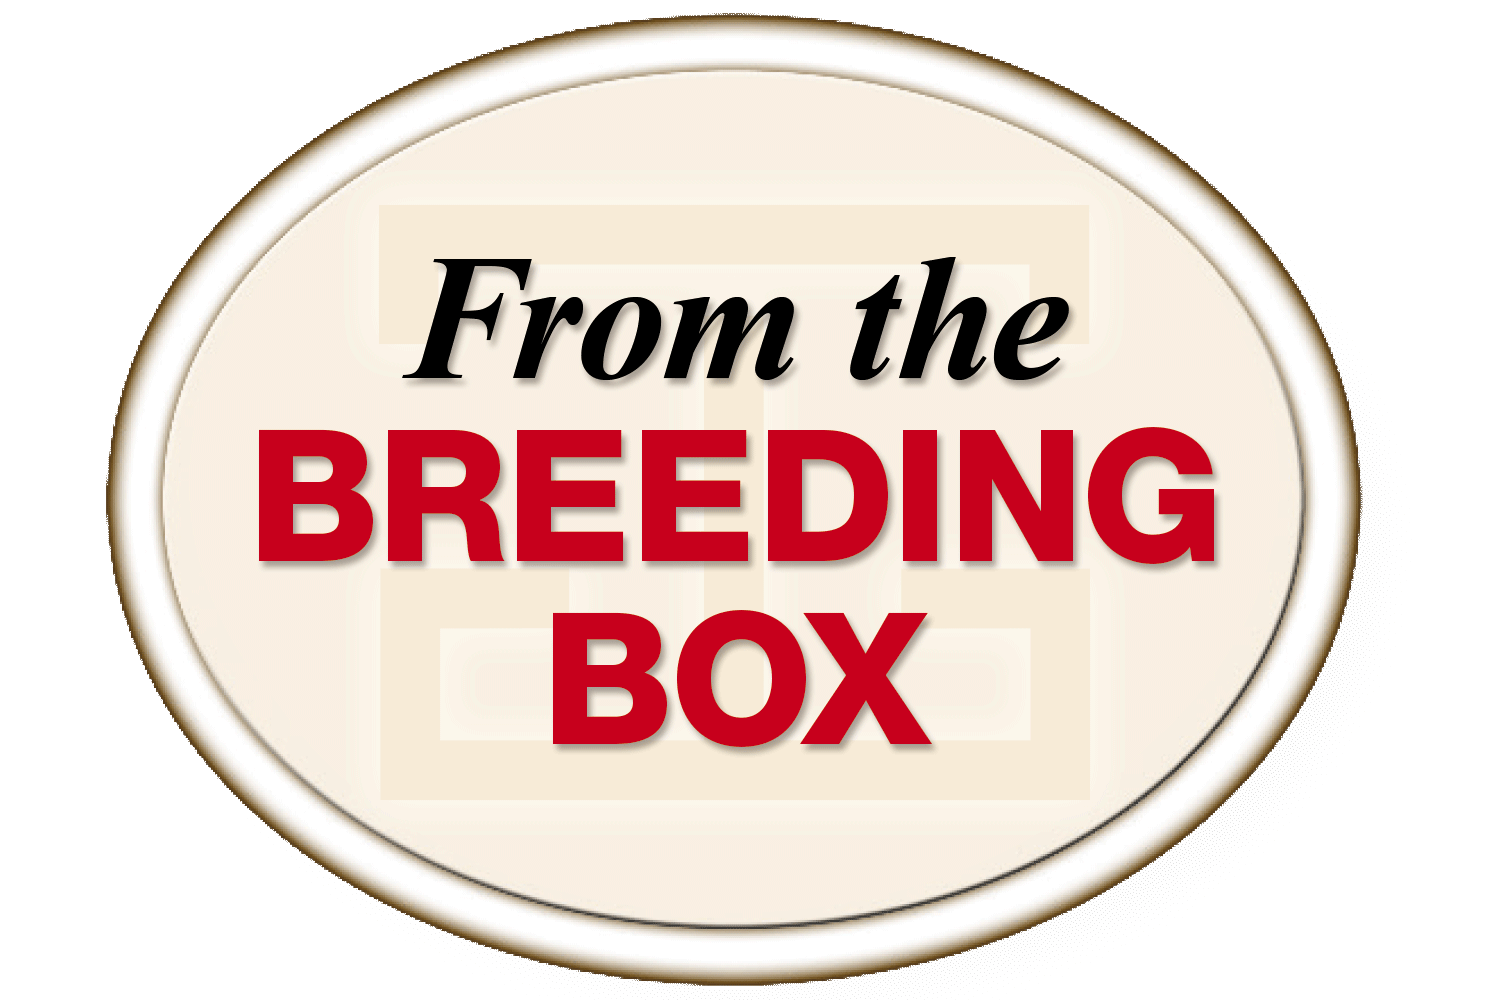 From the Breeding Box